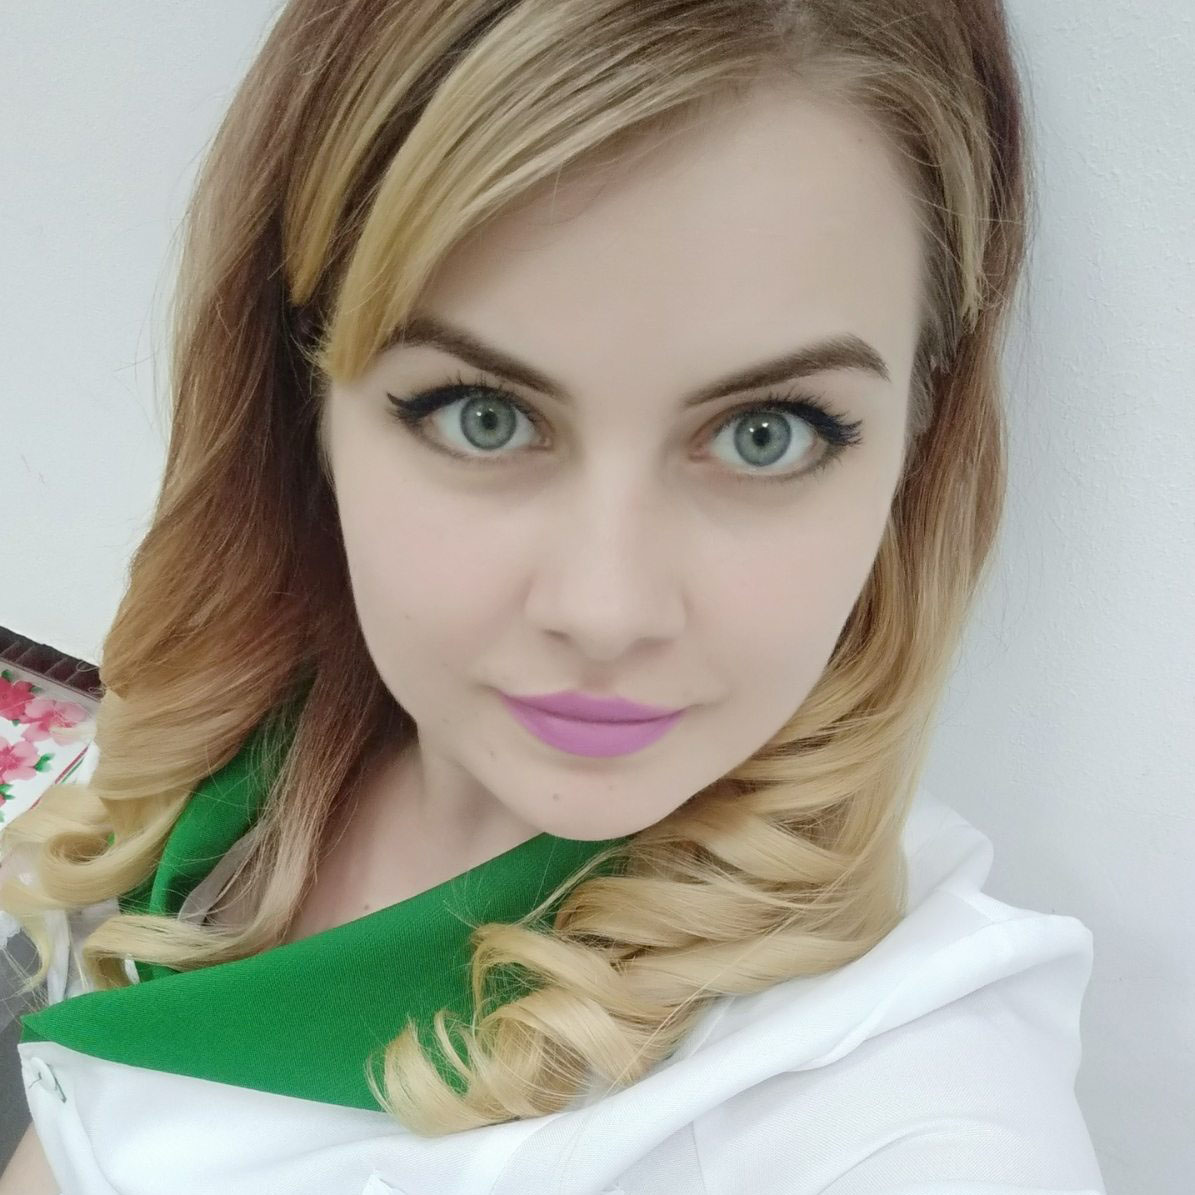 Kovalenko Svetlana